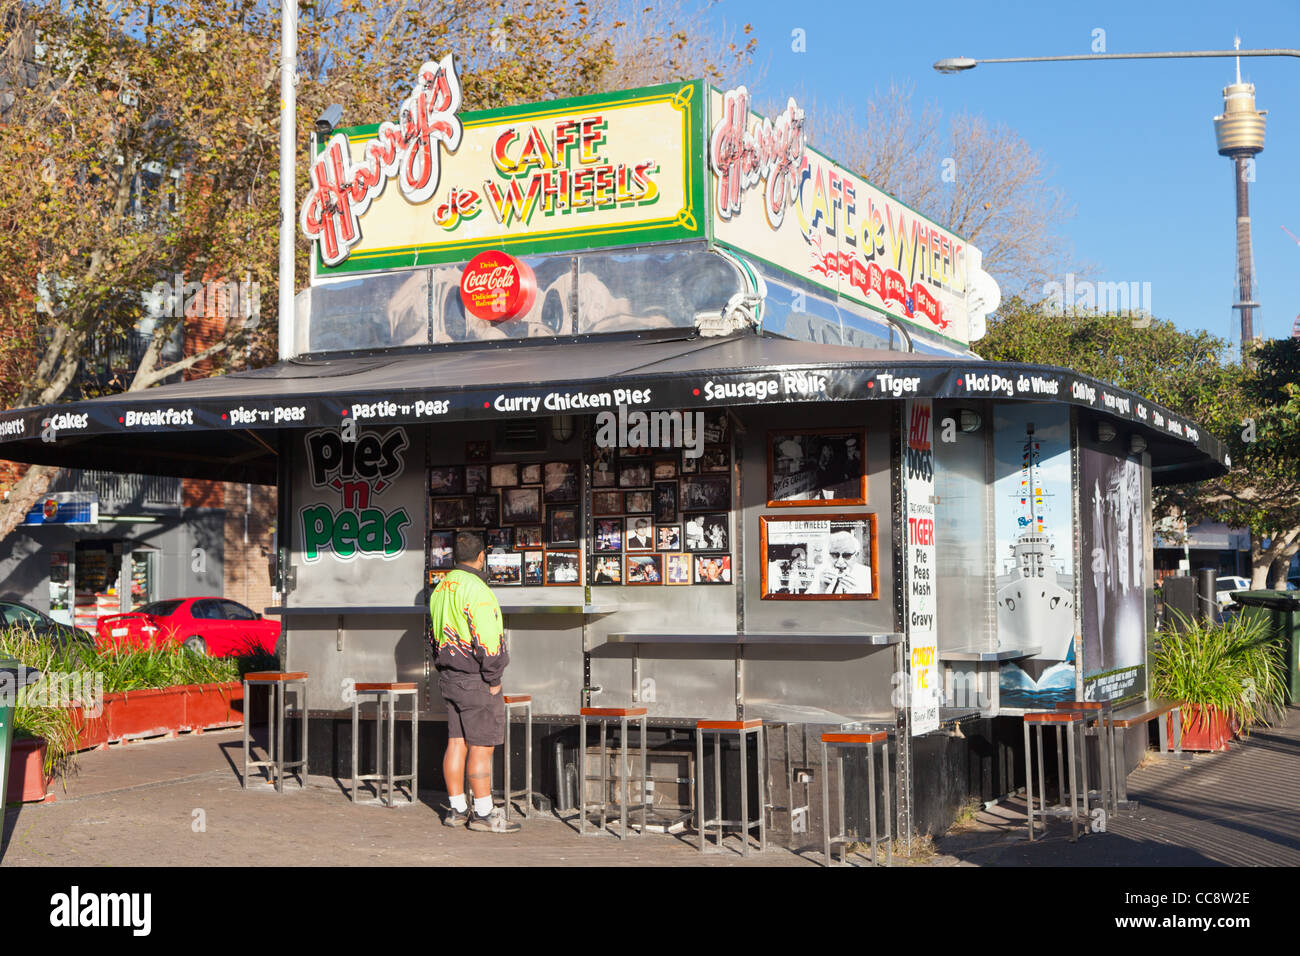 Harry's Cafe de Wheels Sydney Australia Stock Photo - Alamy